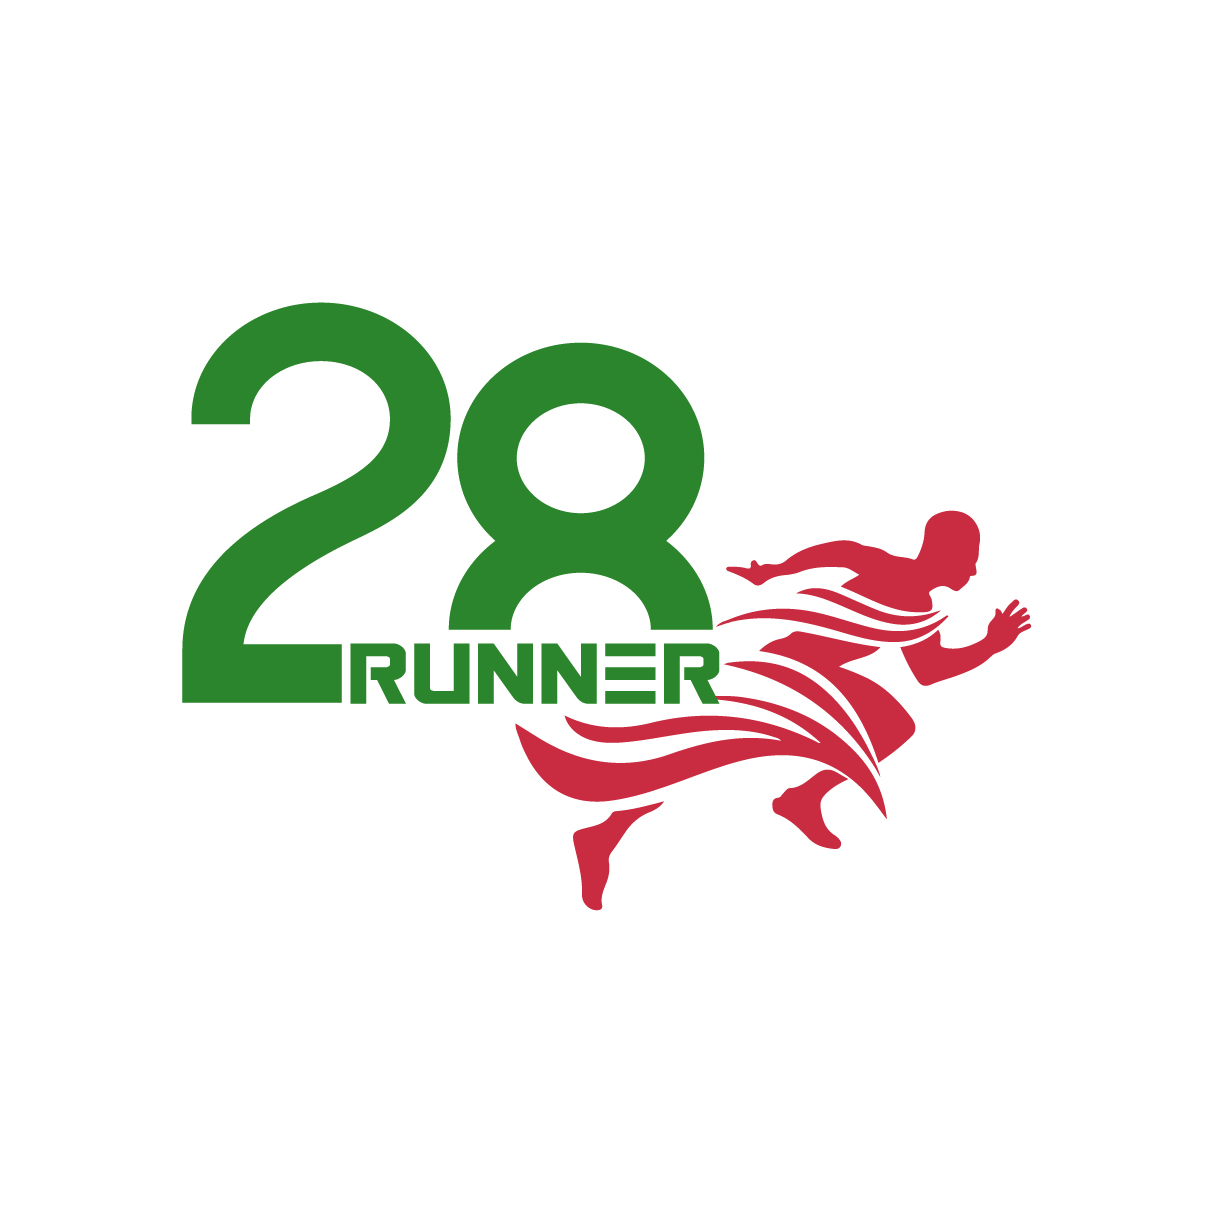 Hoa Binh Runners